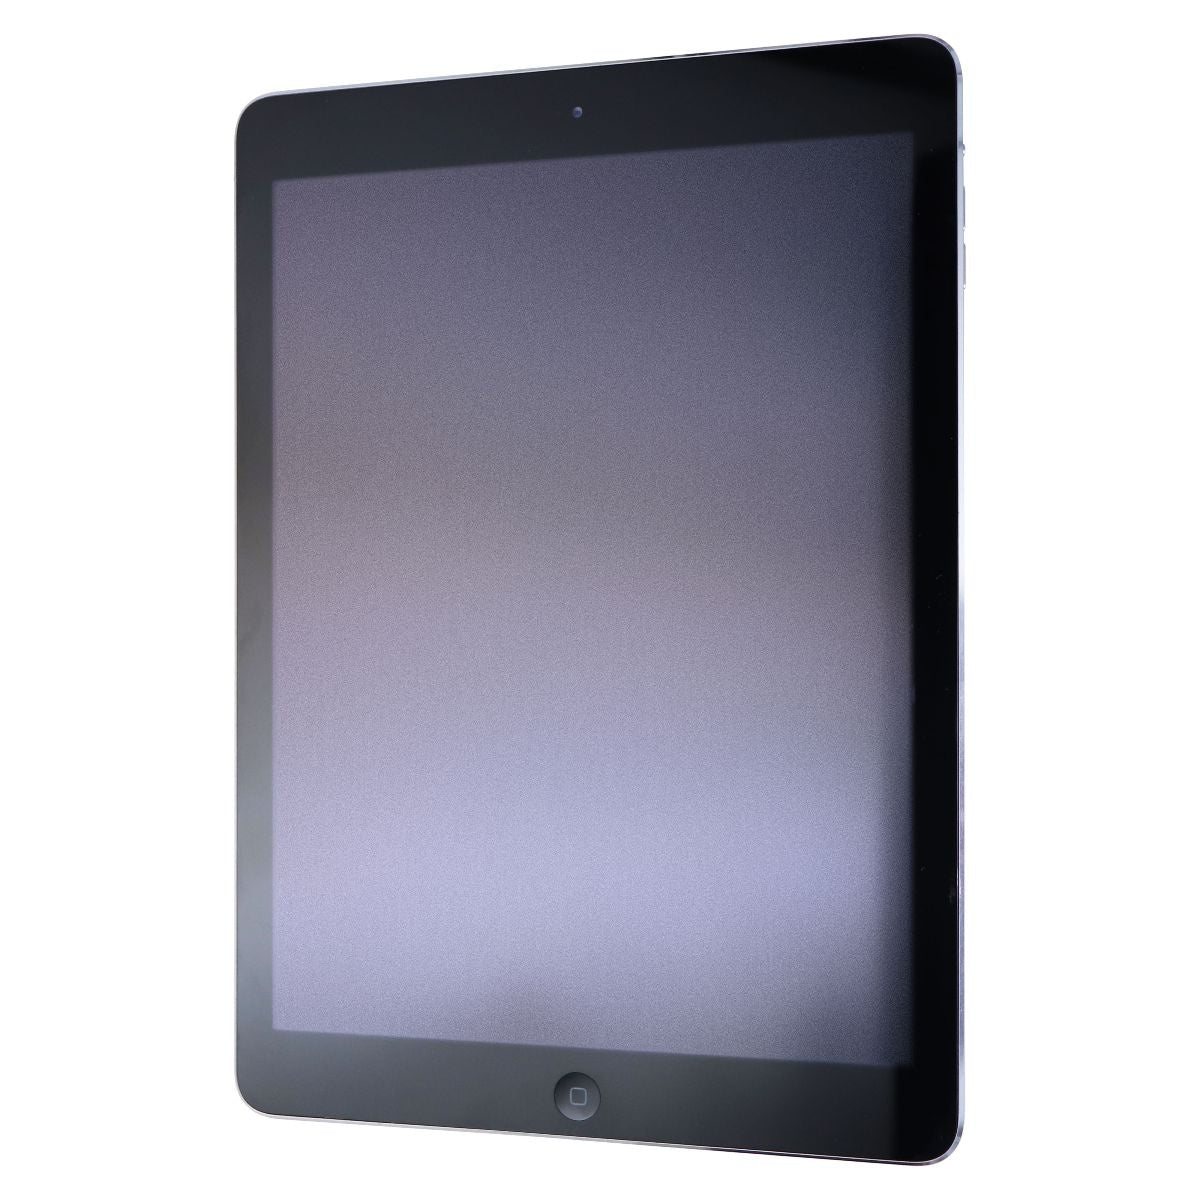 Apple iPad Air 9.7 (1st Gen) Tablet A1474 (Wi-Fi) - 16GB/Space Gray  (MD785LL/A)